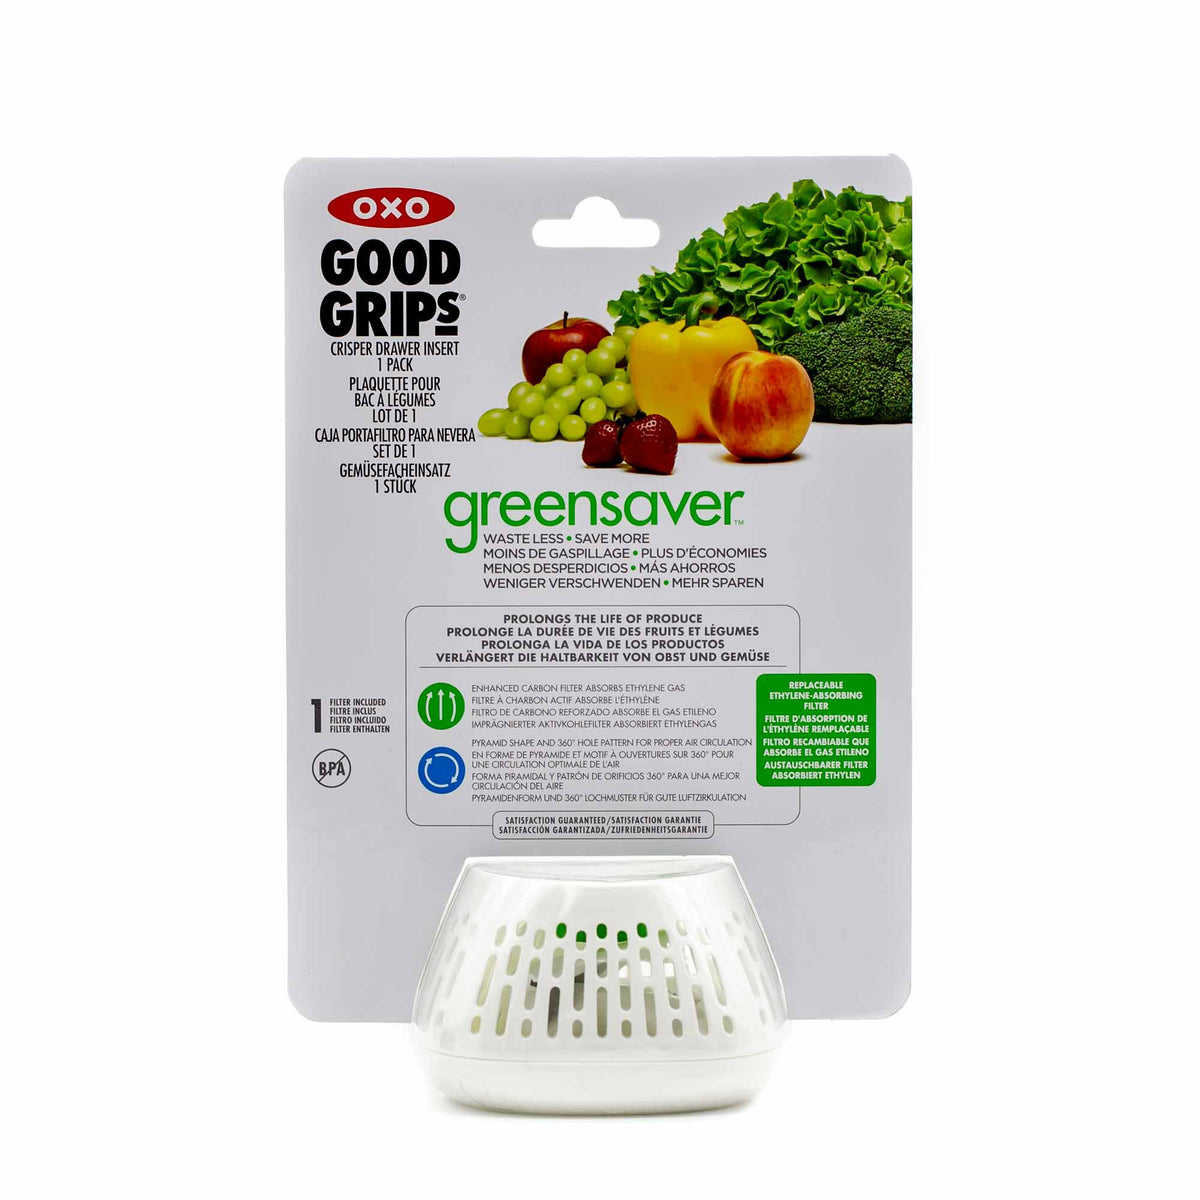 OXO Good Grips Greensaver Carbon Refills - 4 Pack